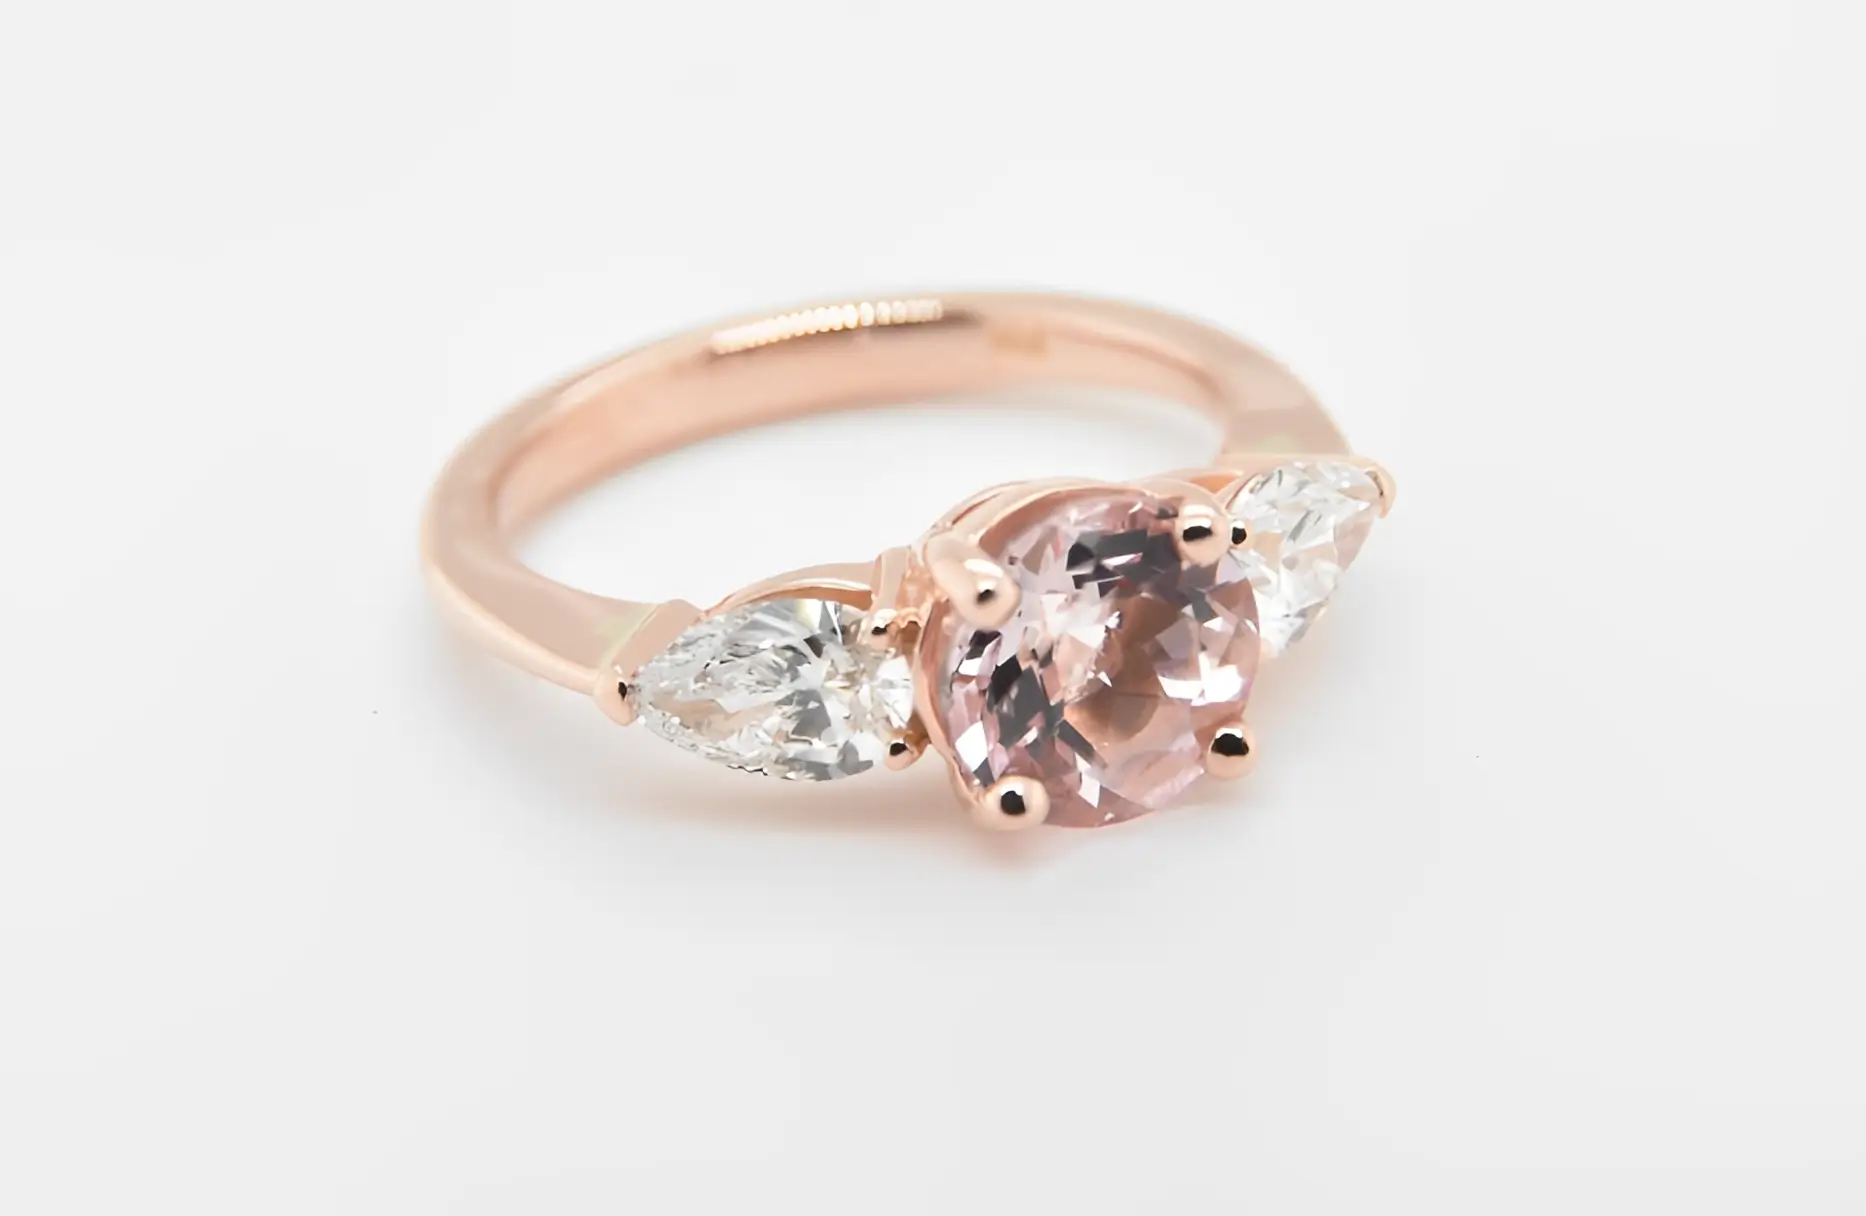 pink diamond engagement ring in rose gold settting